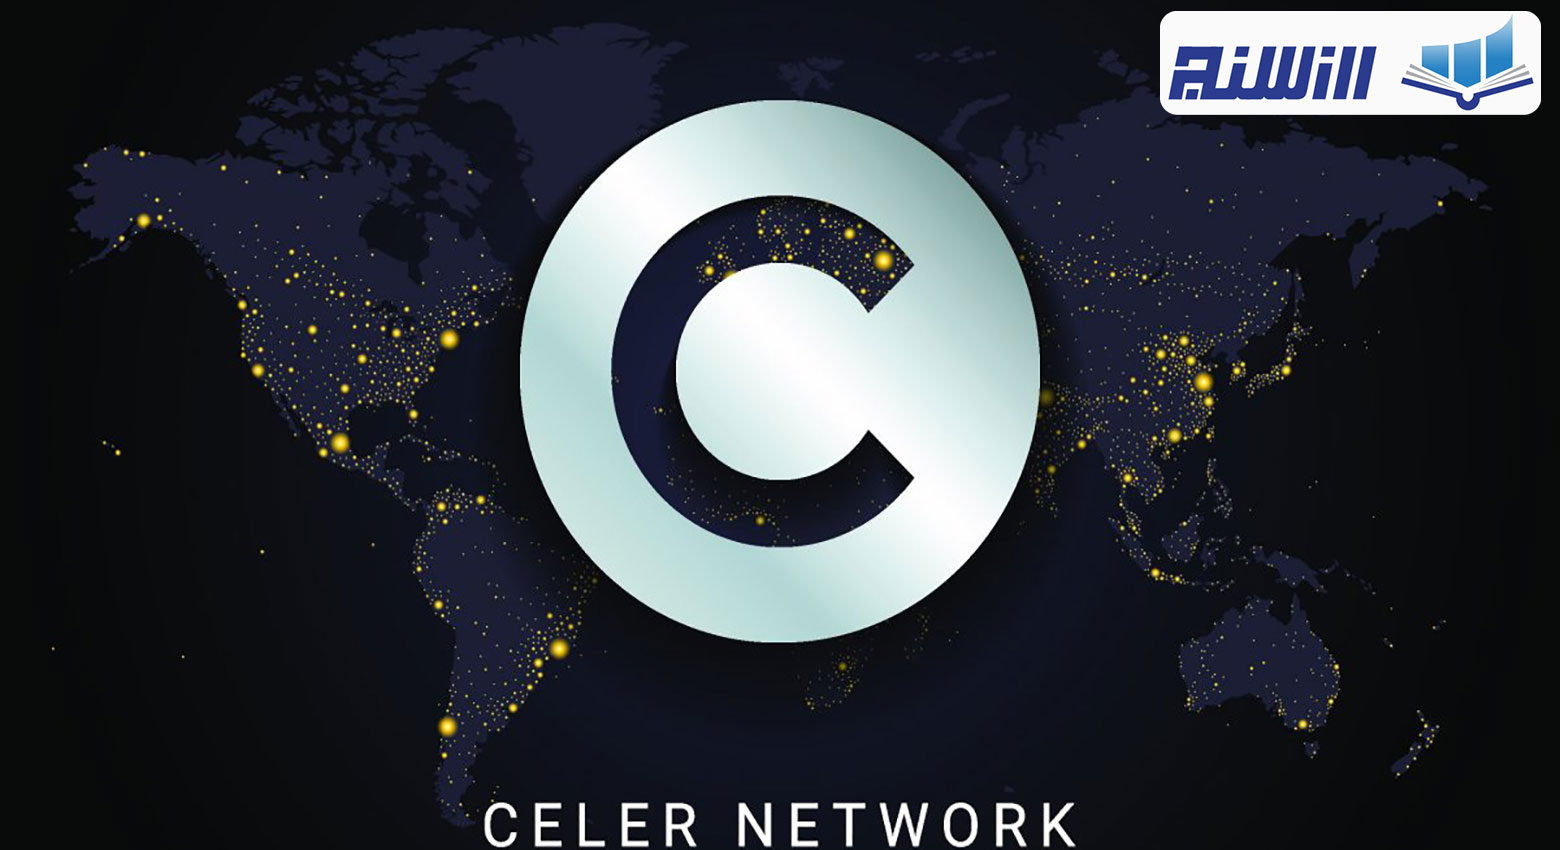 شبکه سلر نتورک Celer Network چیست؟ (همه چیز در مورد شبکه سلر نتورک همراه با ویدیو)